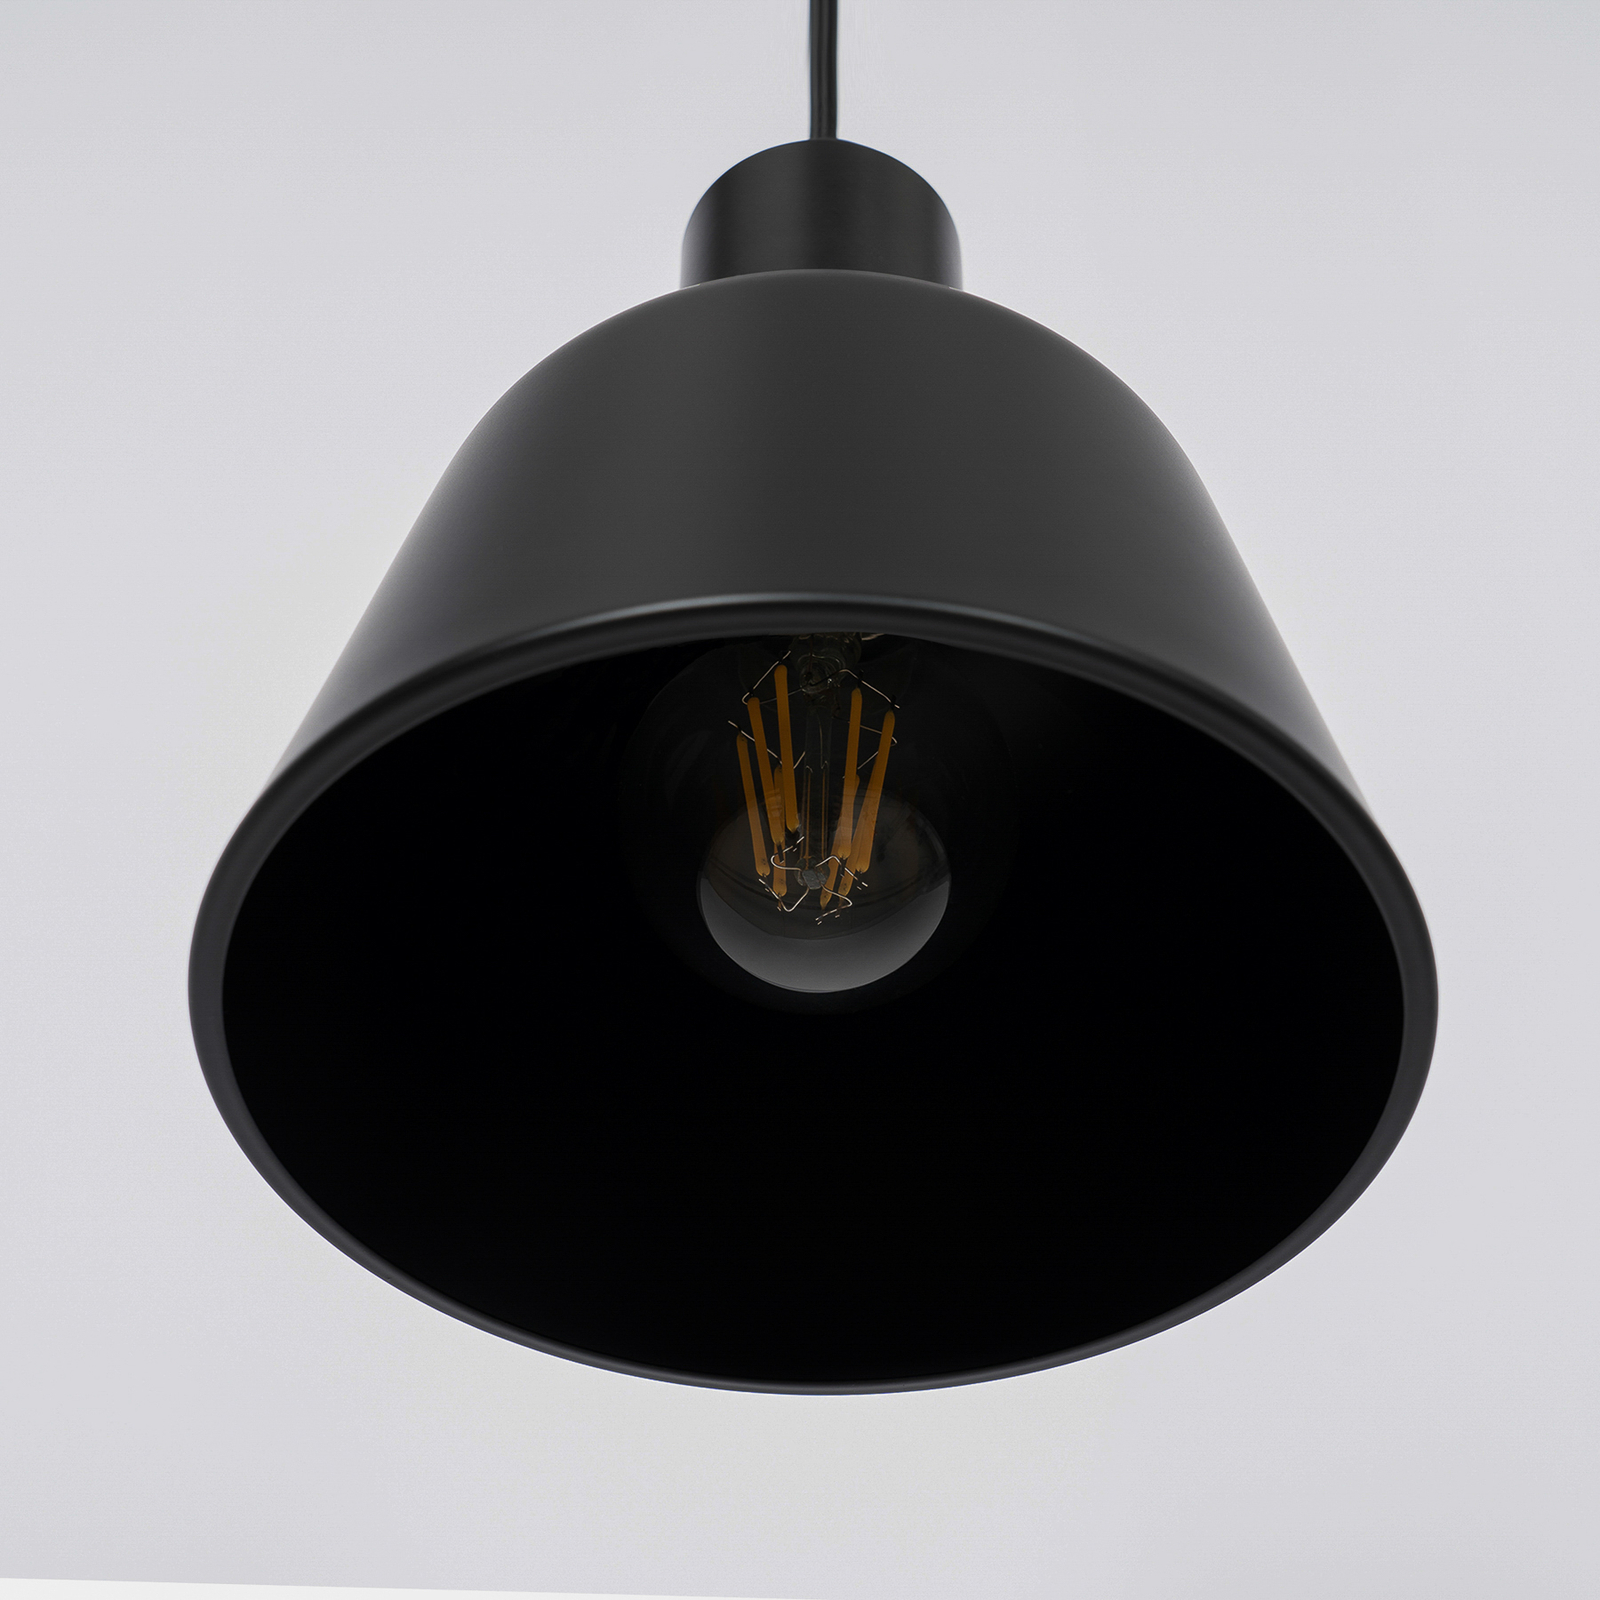 Lucande Servan hanglamp, zwart, 1-lamp